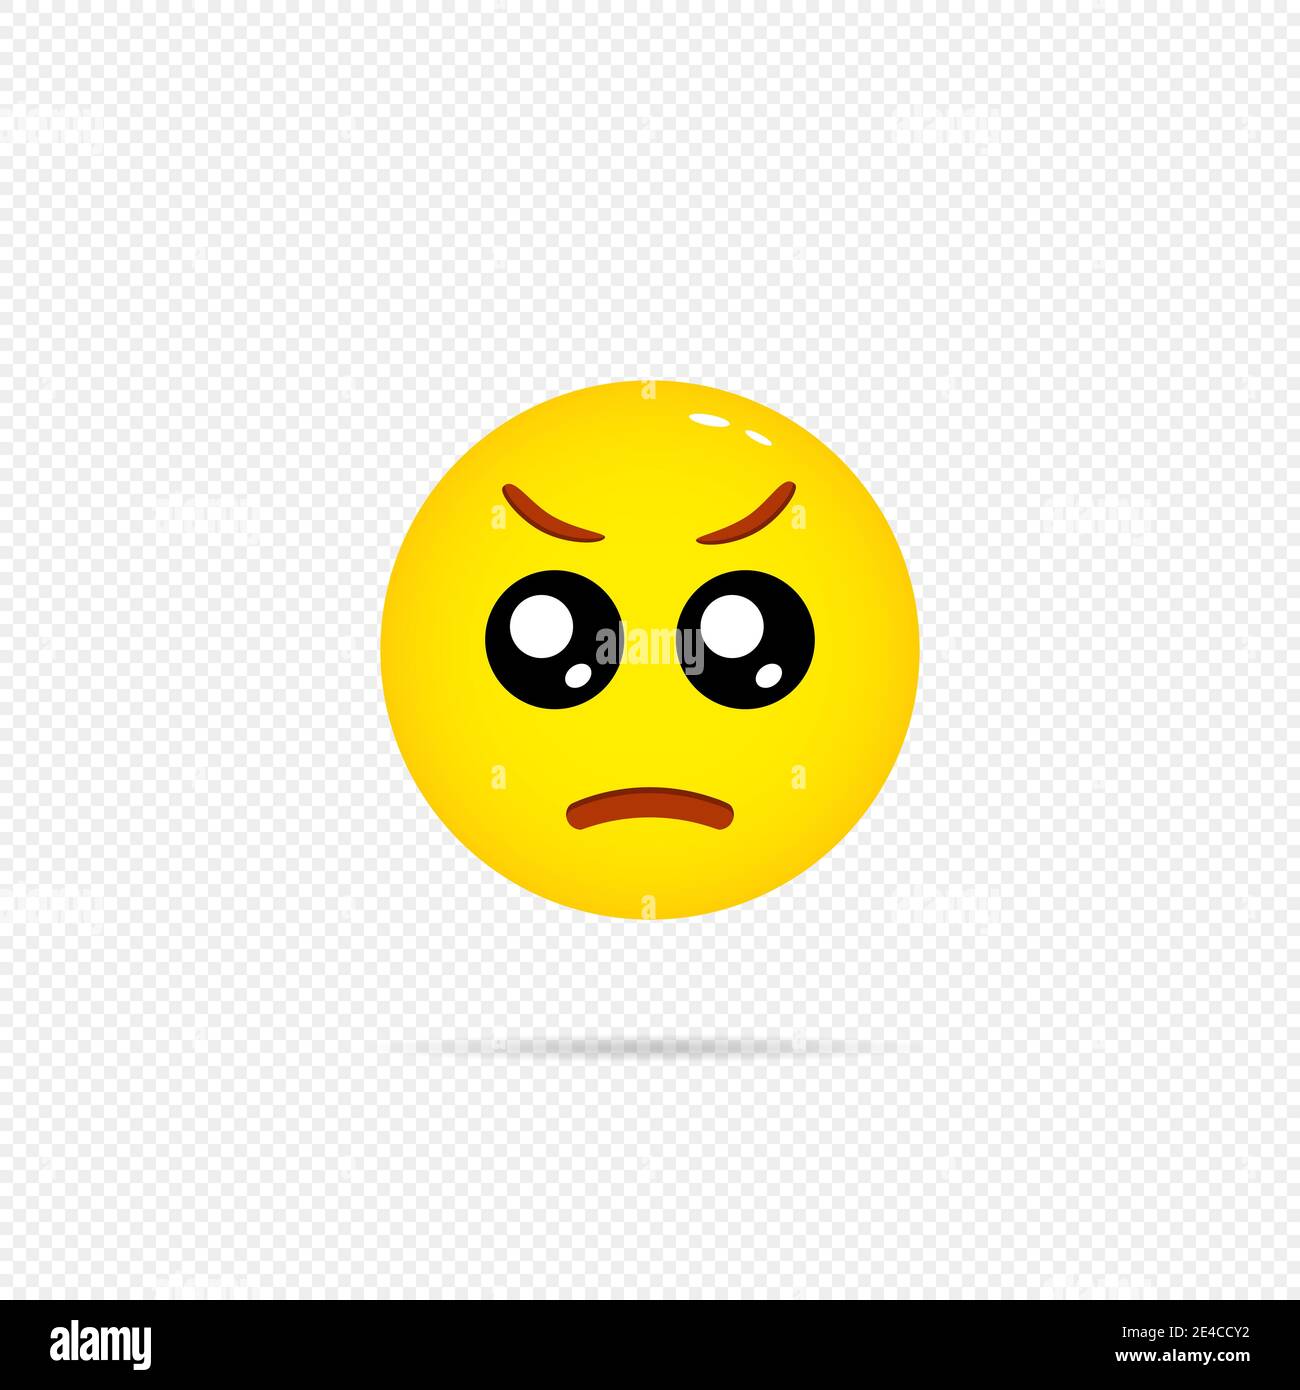 Angry emoji icon. Social media concept. Stock Vector